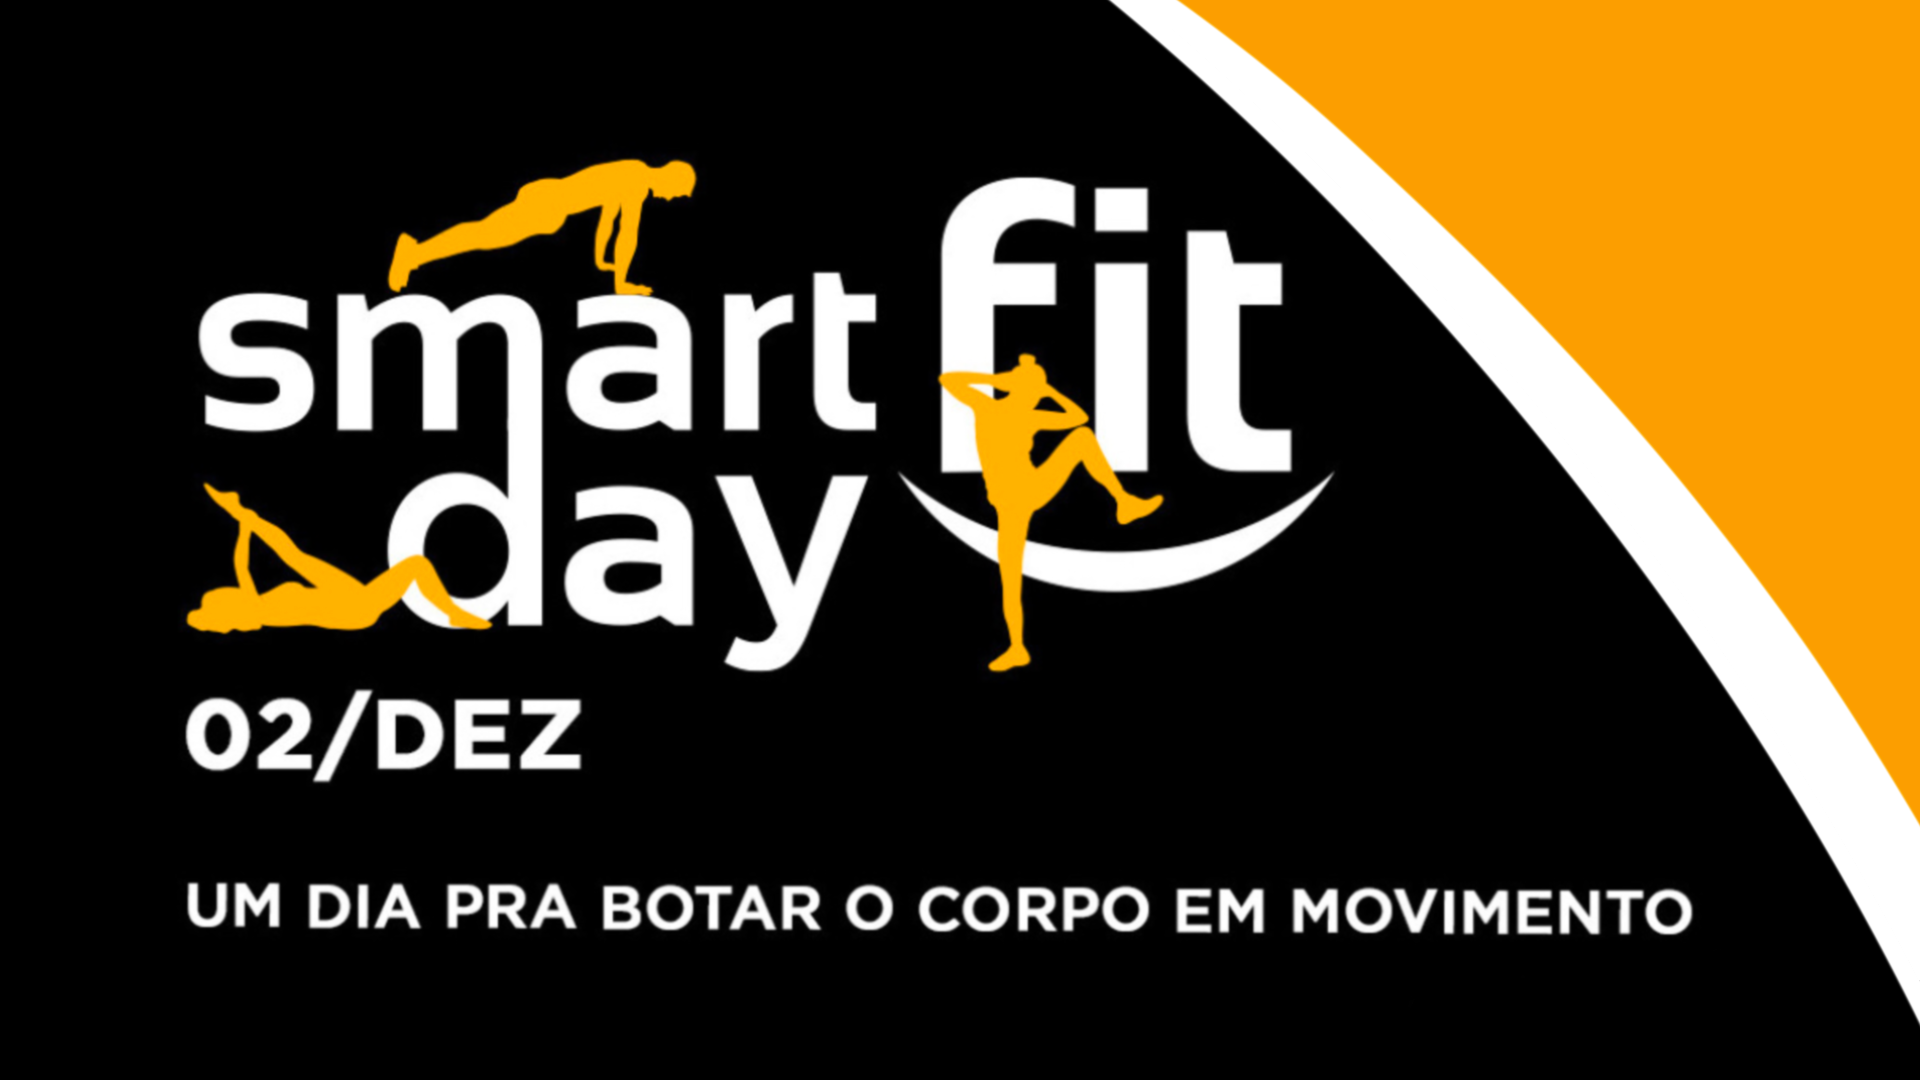 Deu a louca na Smart Fit? Rede de academias promove dia gratuito no Brasil